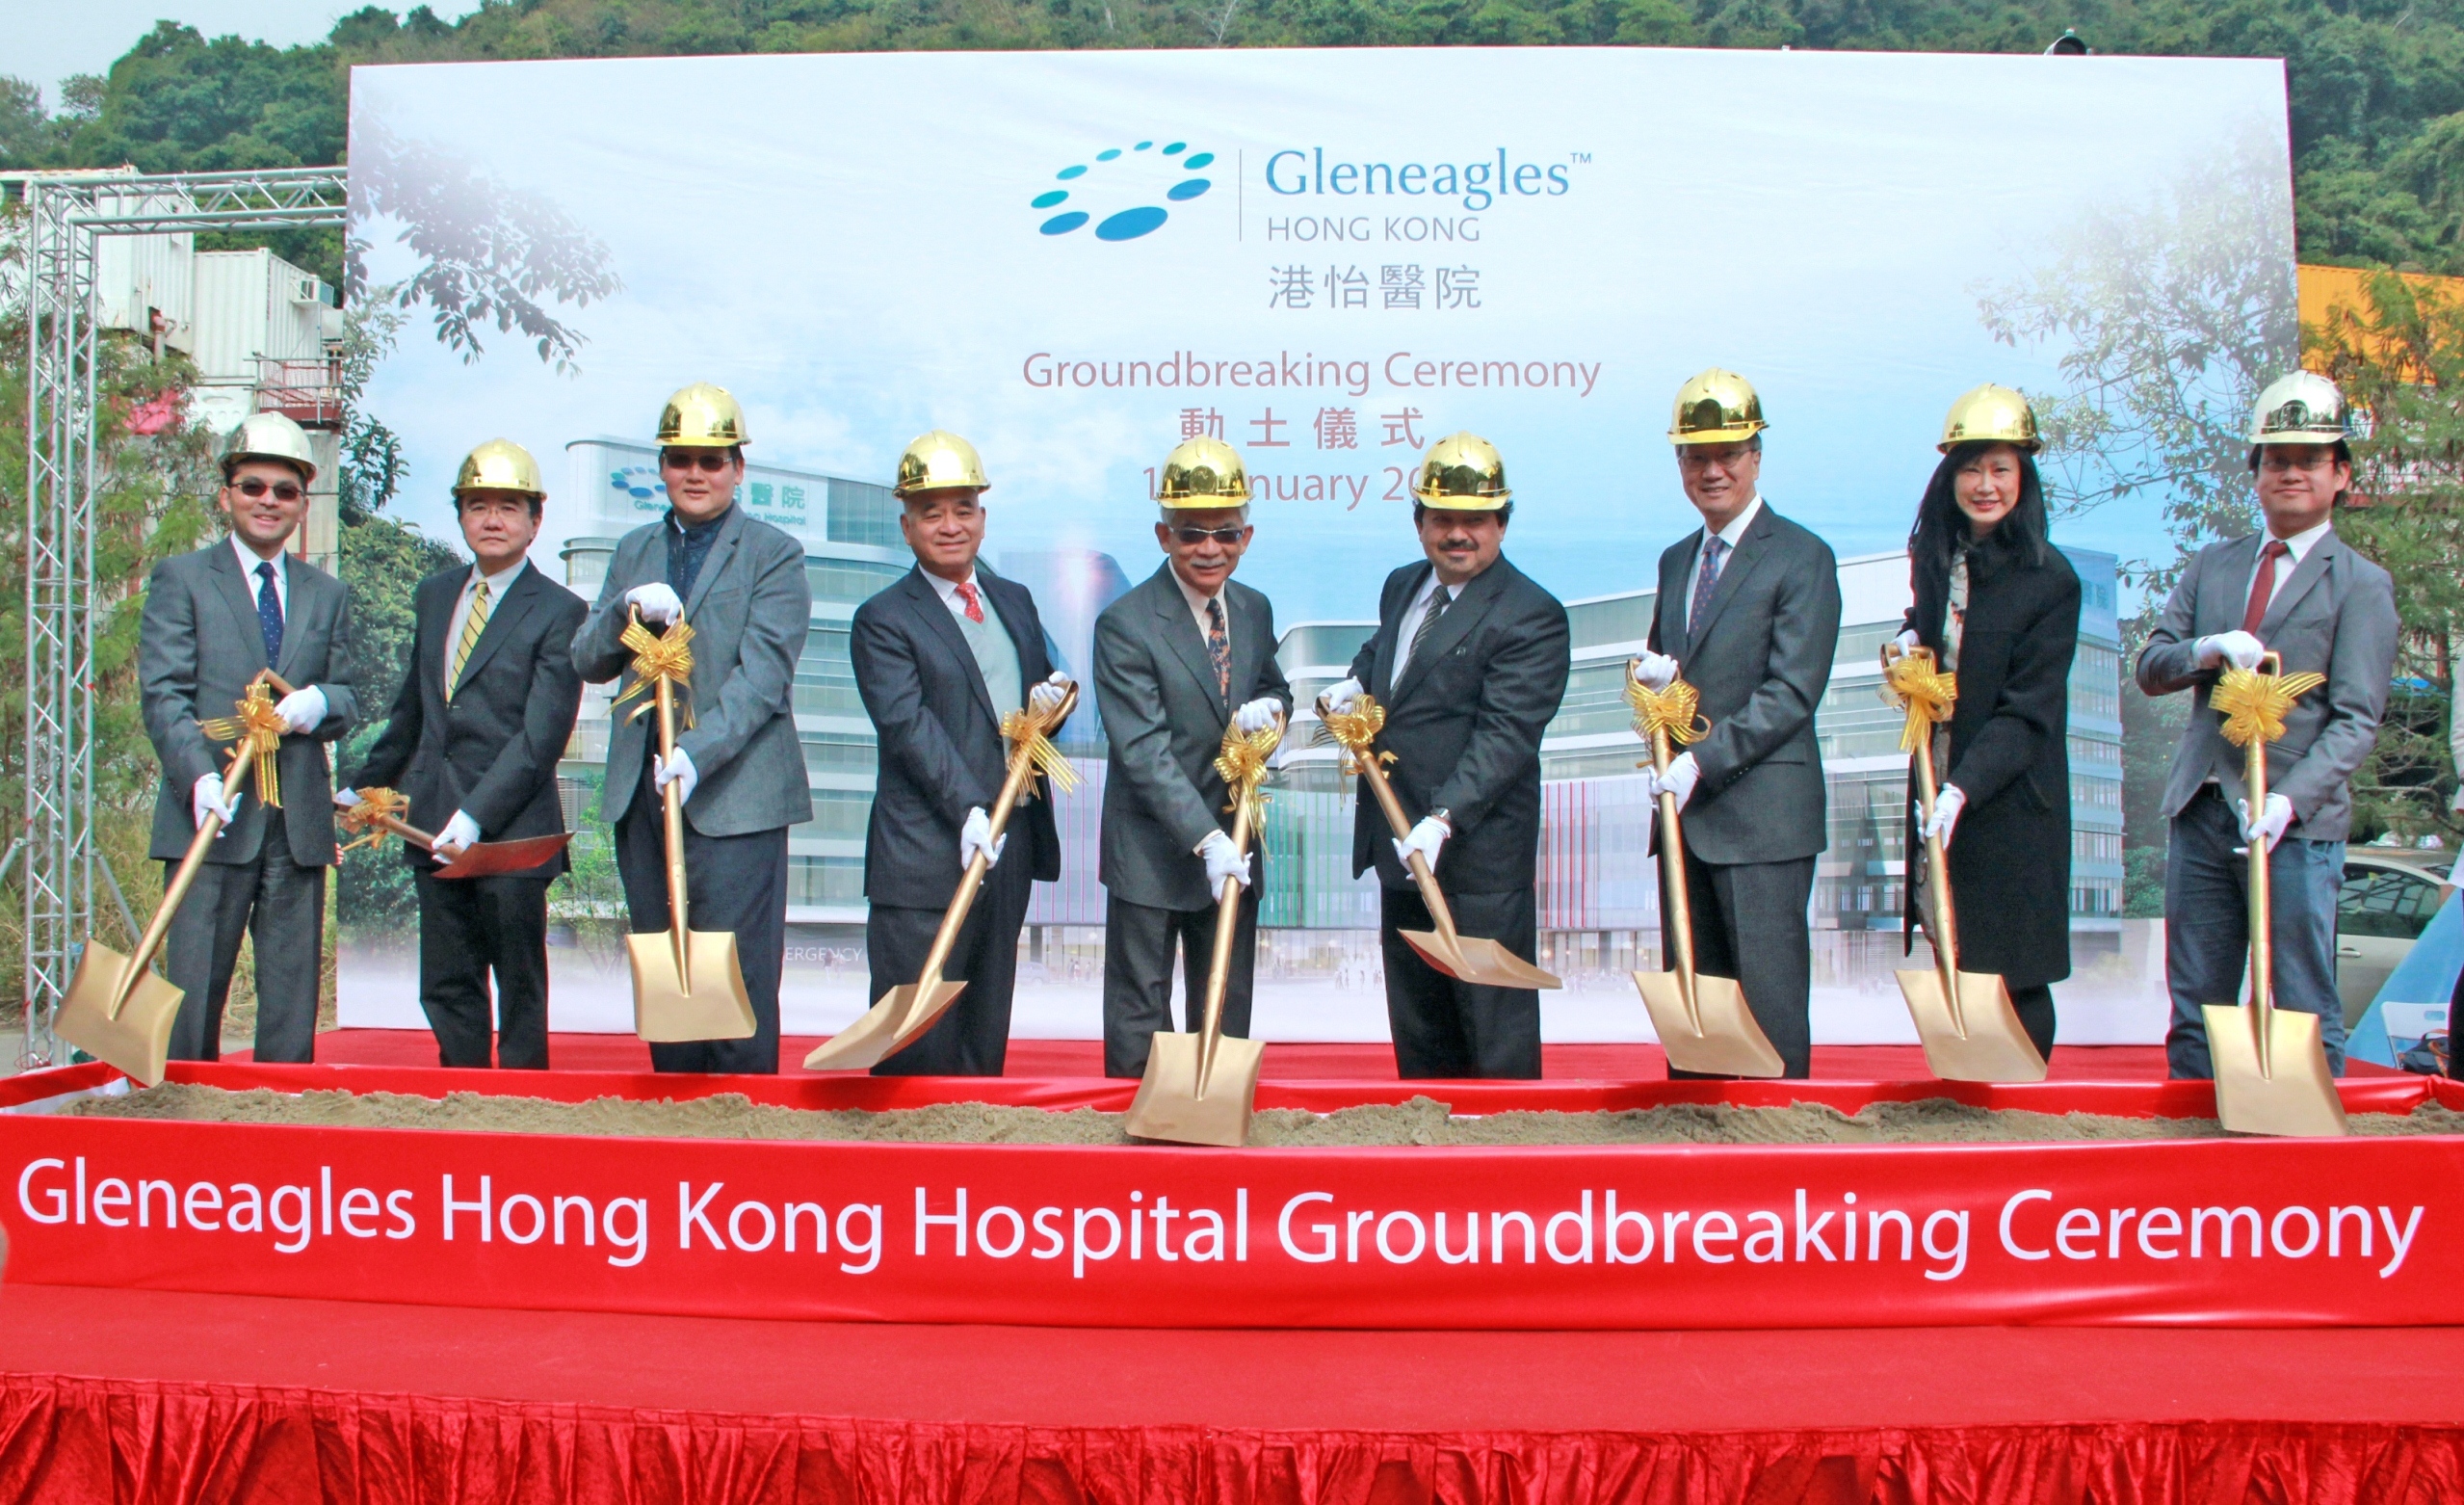 Groundbreaking of new Gleneagles Hong Kong Hospital